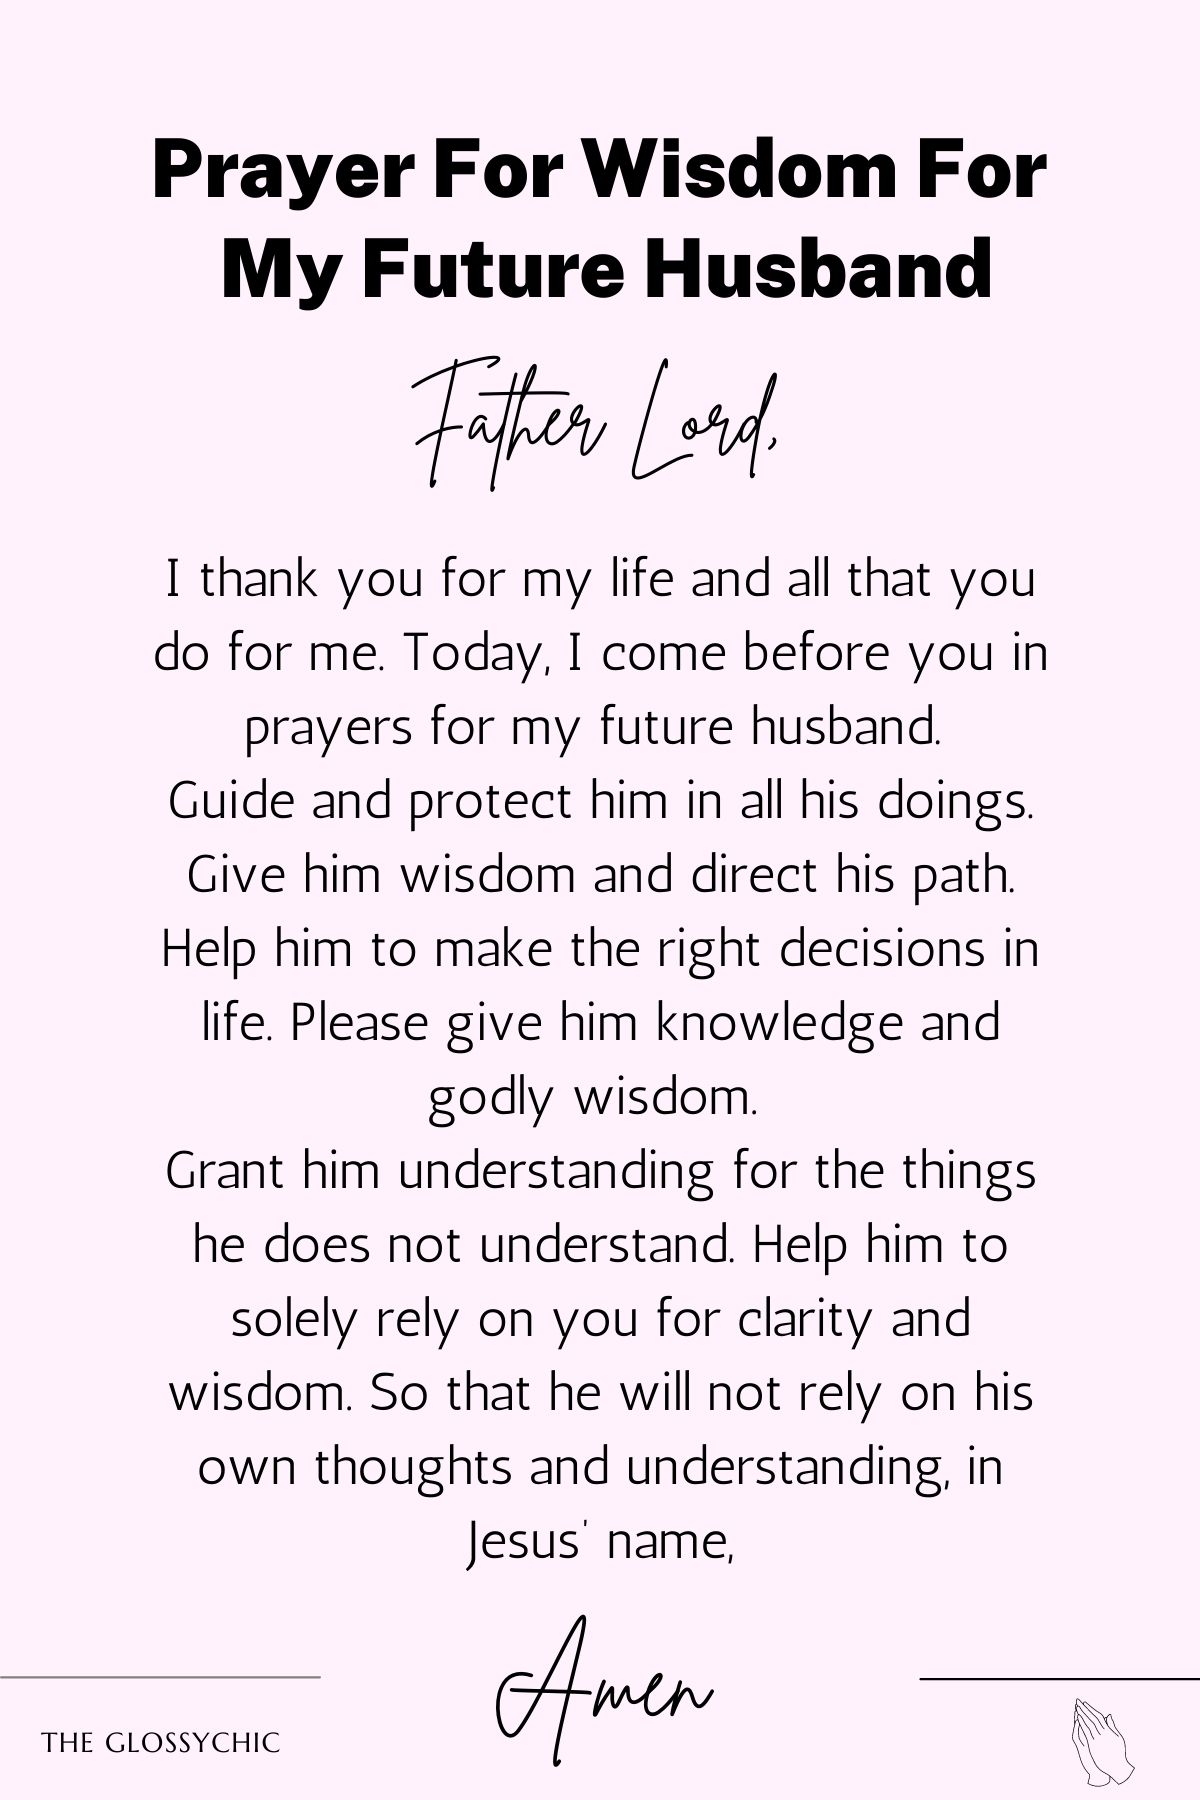 Prayer for wisdom for my future husband